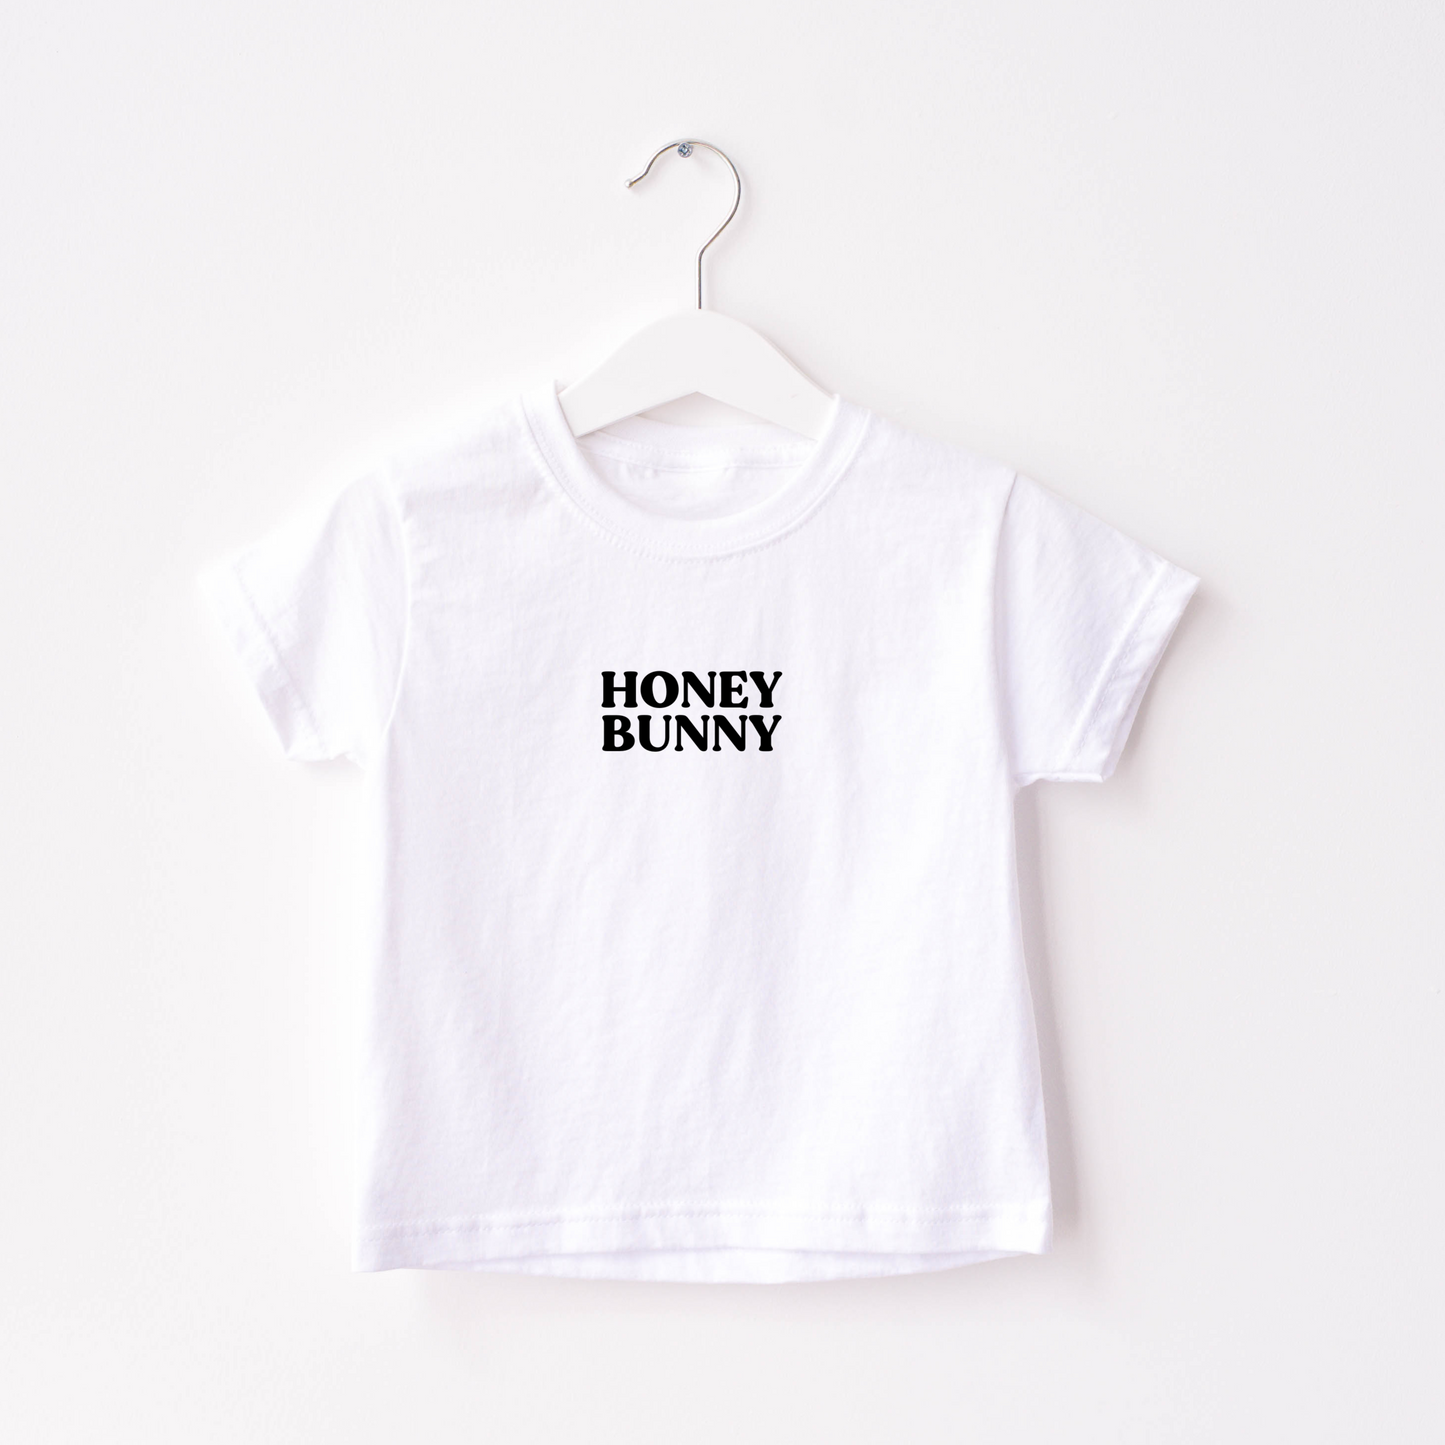 'Honey Bunny' Easter T-Shirts